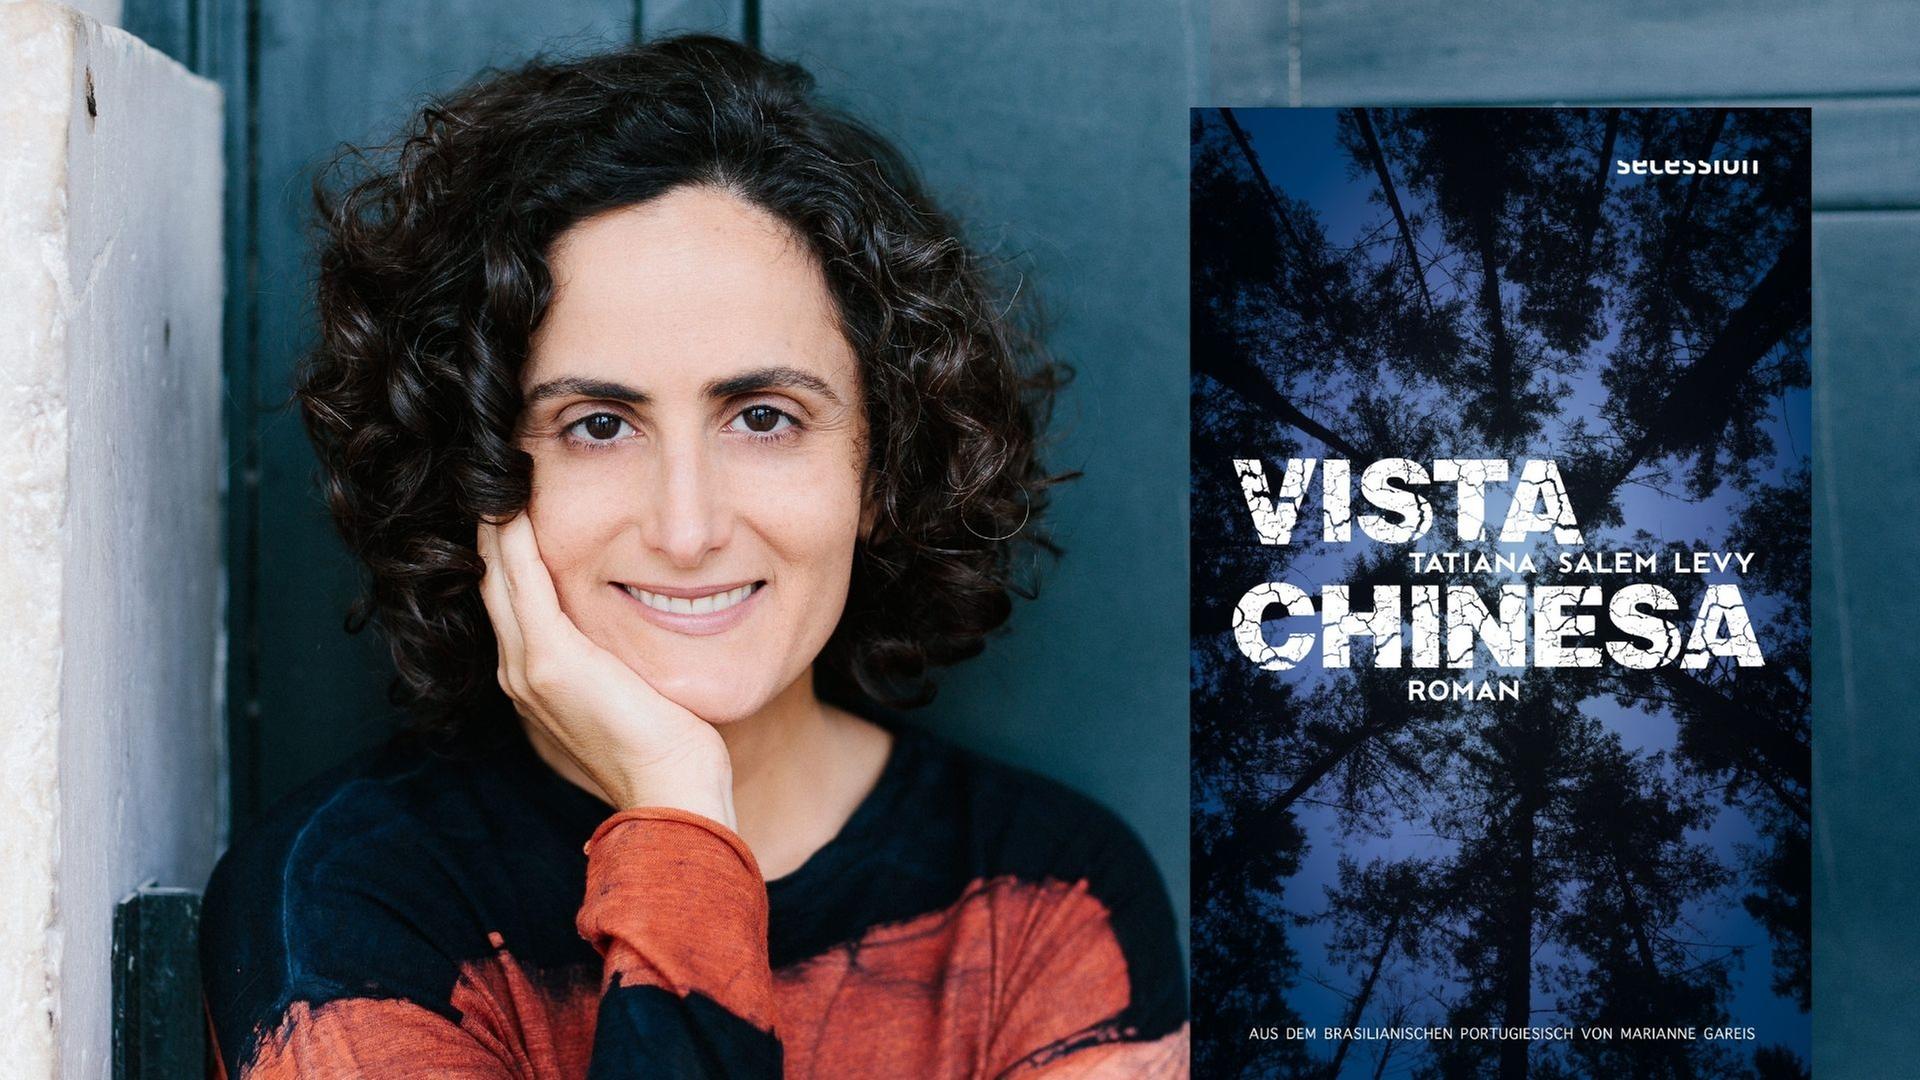 Tatiana Salem Levy und ihr Roman "Vista Chinesa"